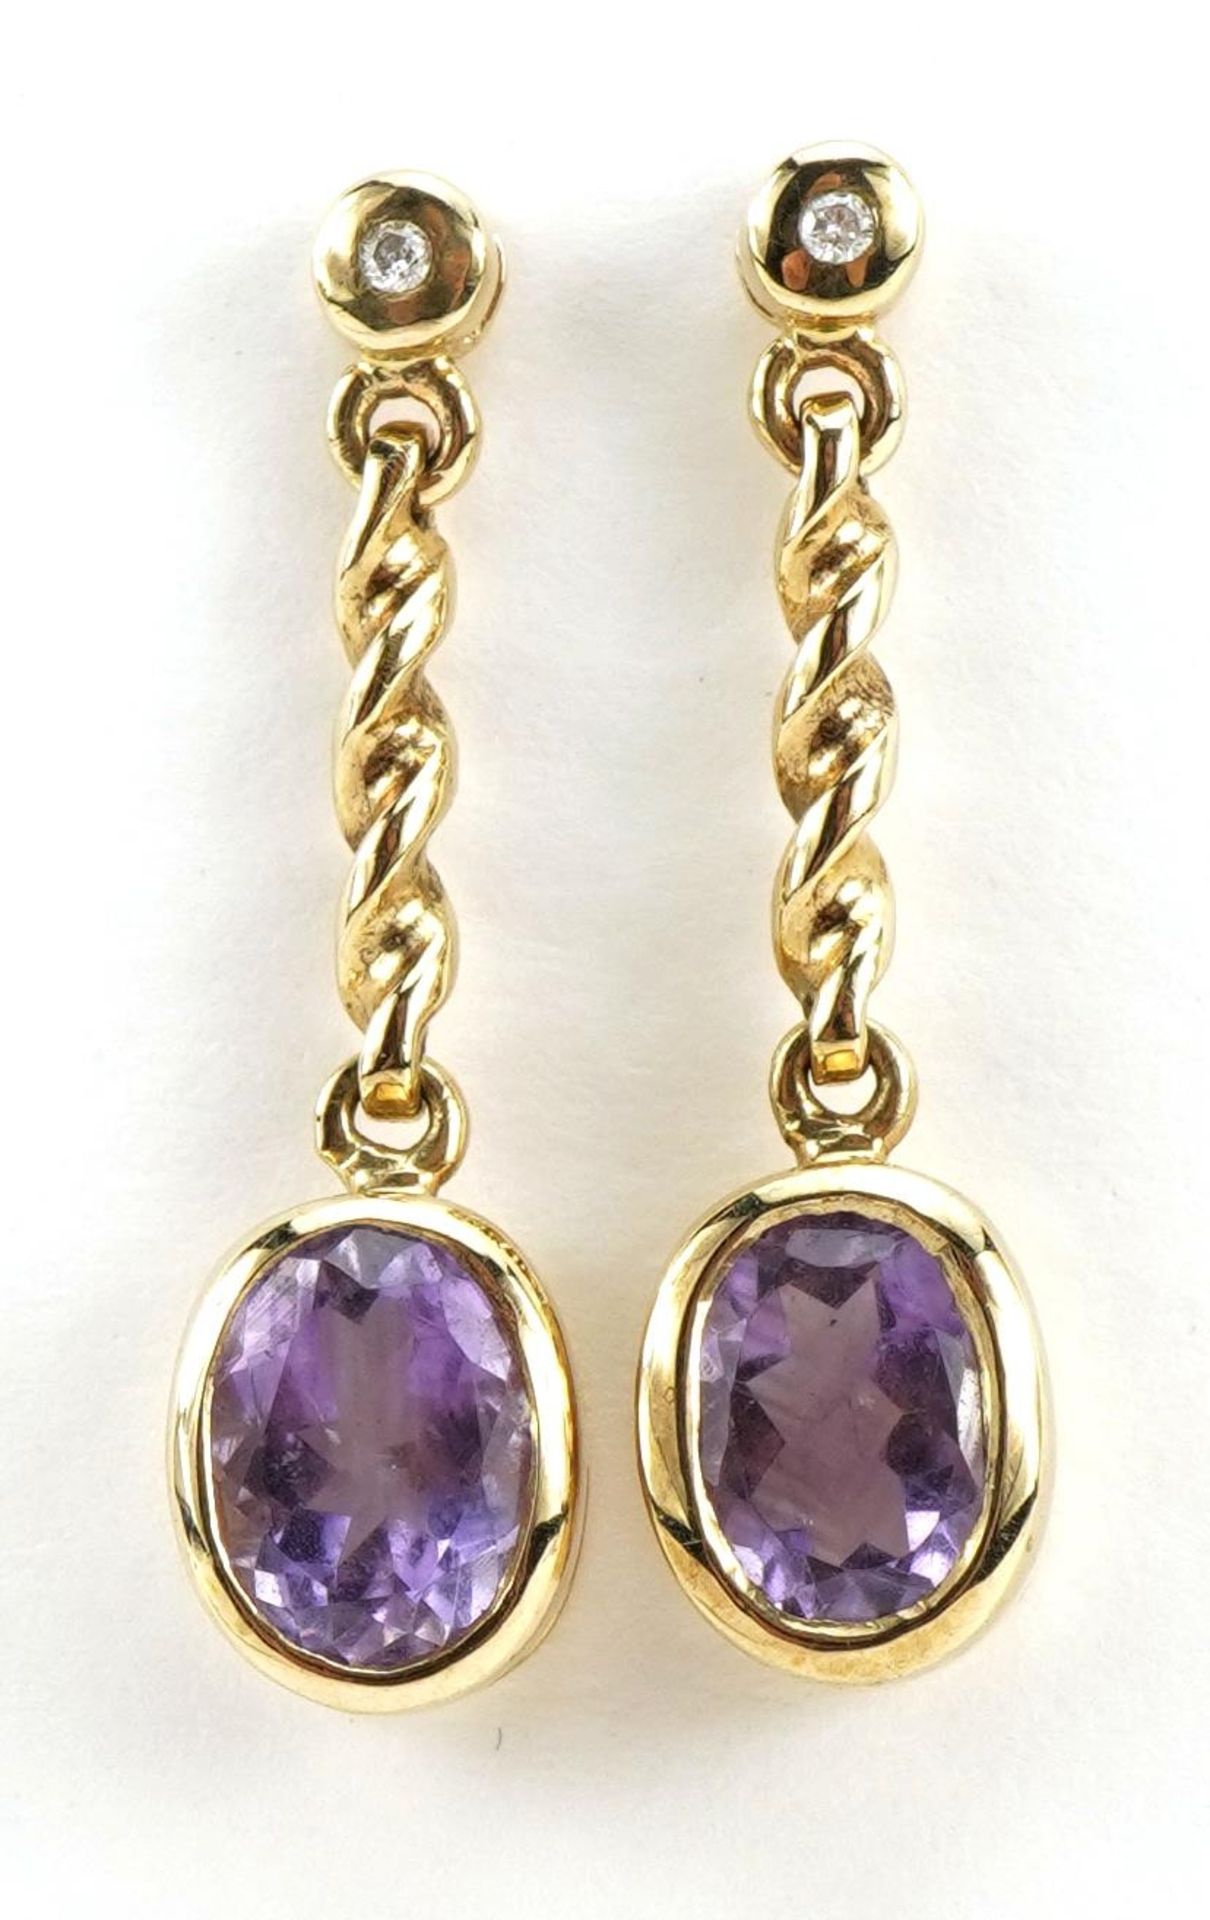 Pair of 9ct gold diamond and amethyst rope twist drop earrings, 2.9cm high, 3.7g